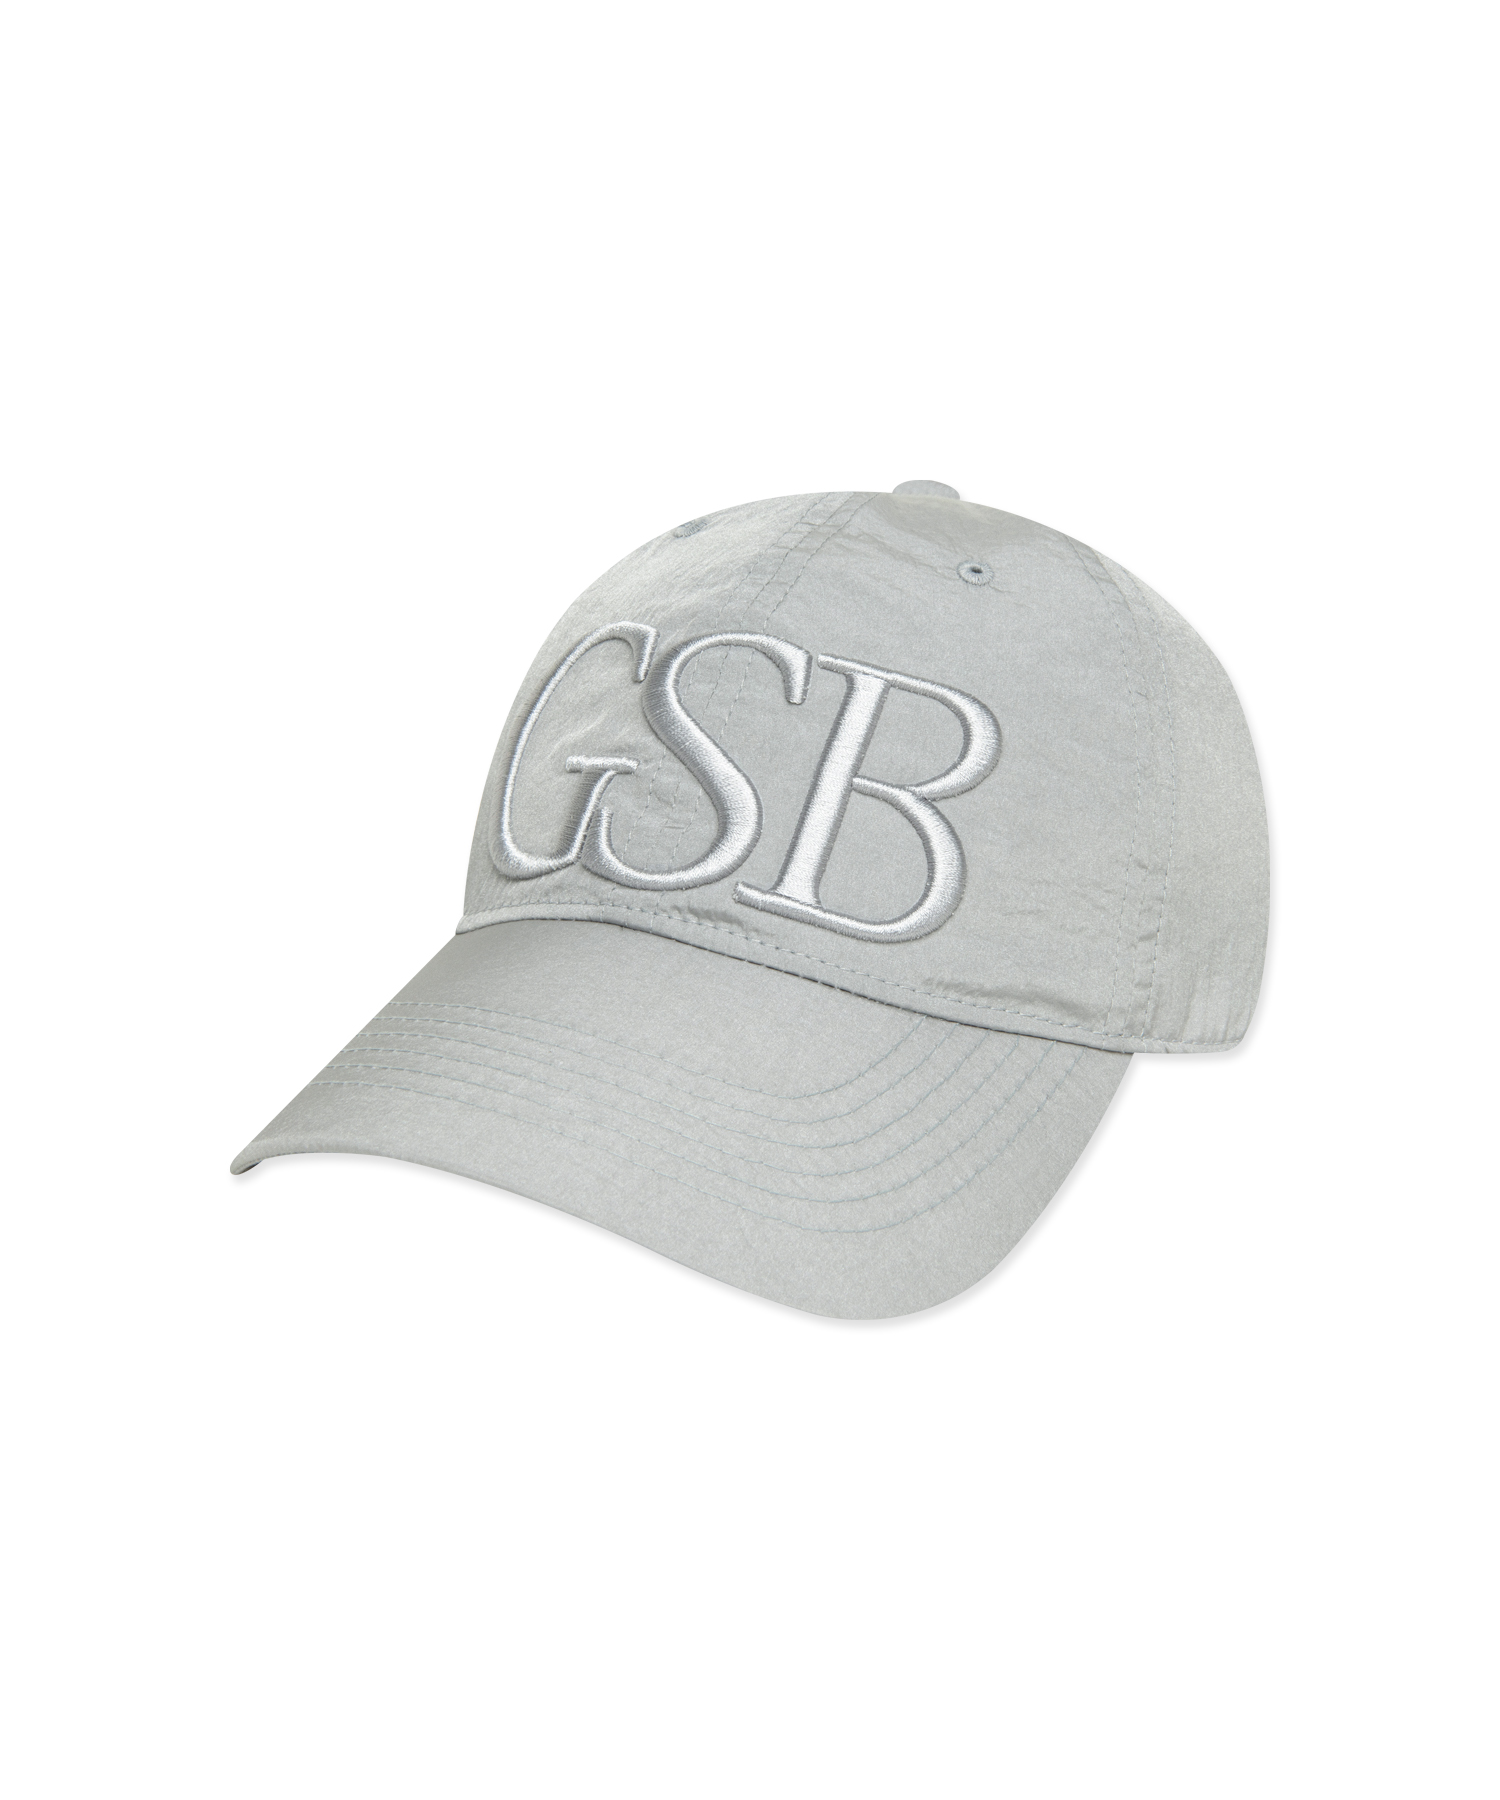 GSB GLOSSY CAP gray